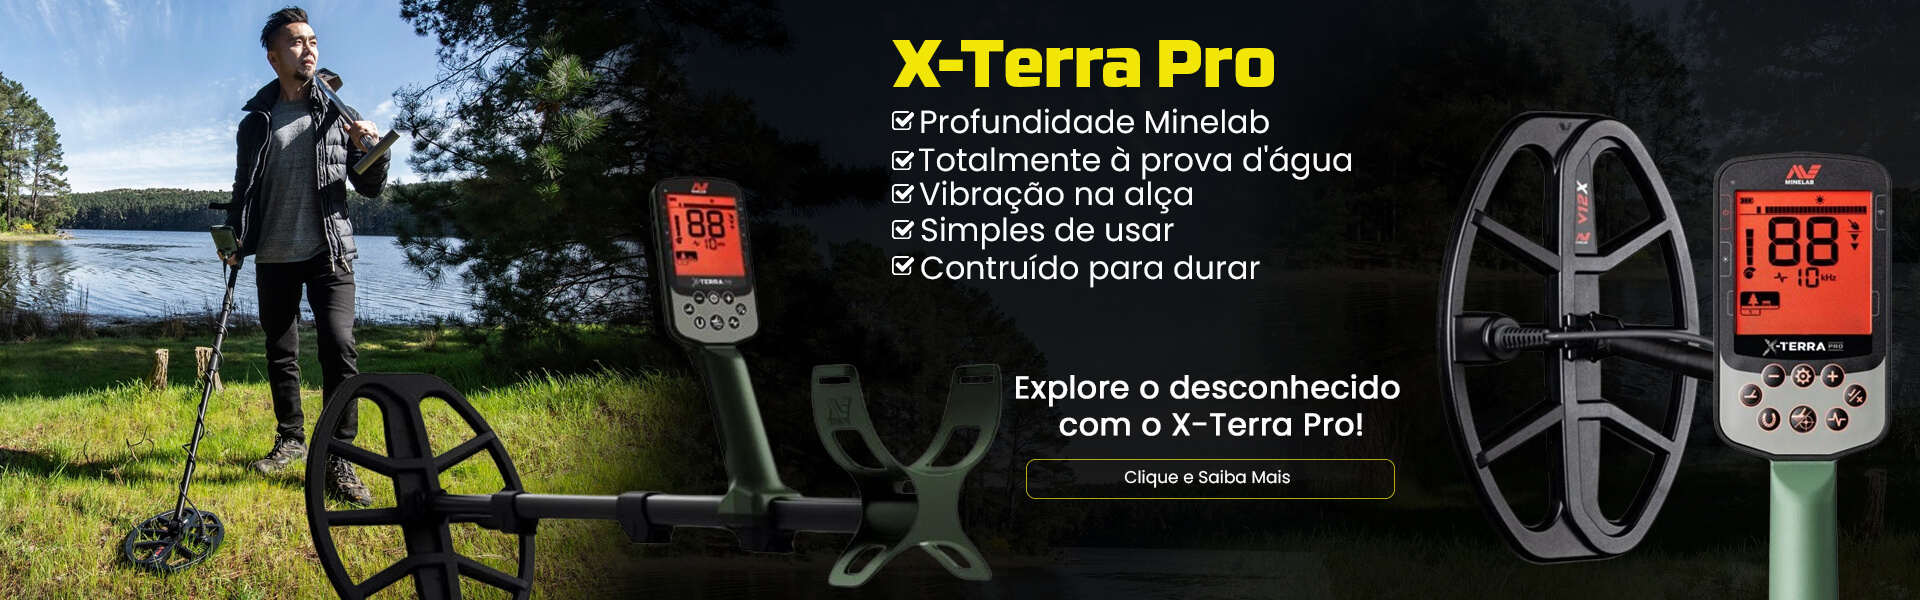 Banner x-terra pro